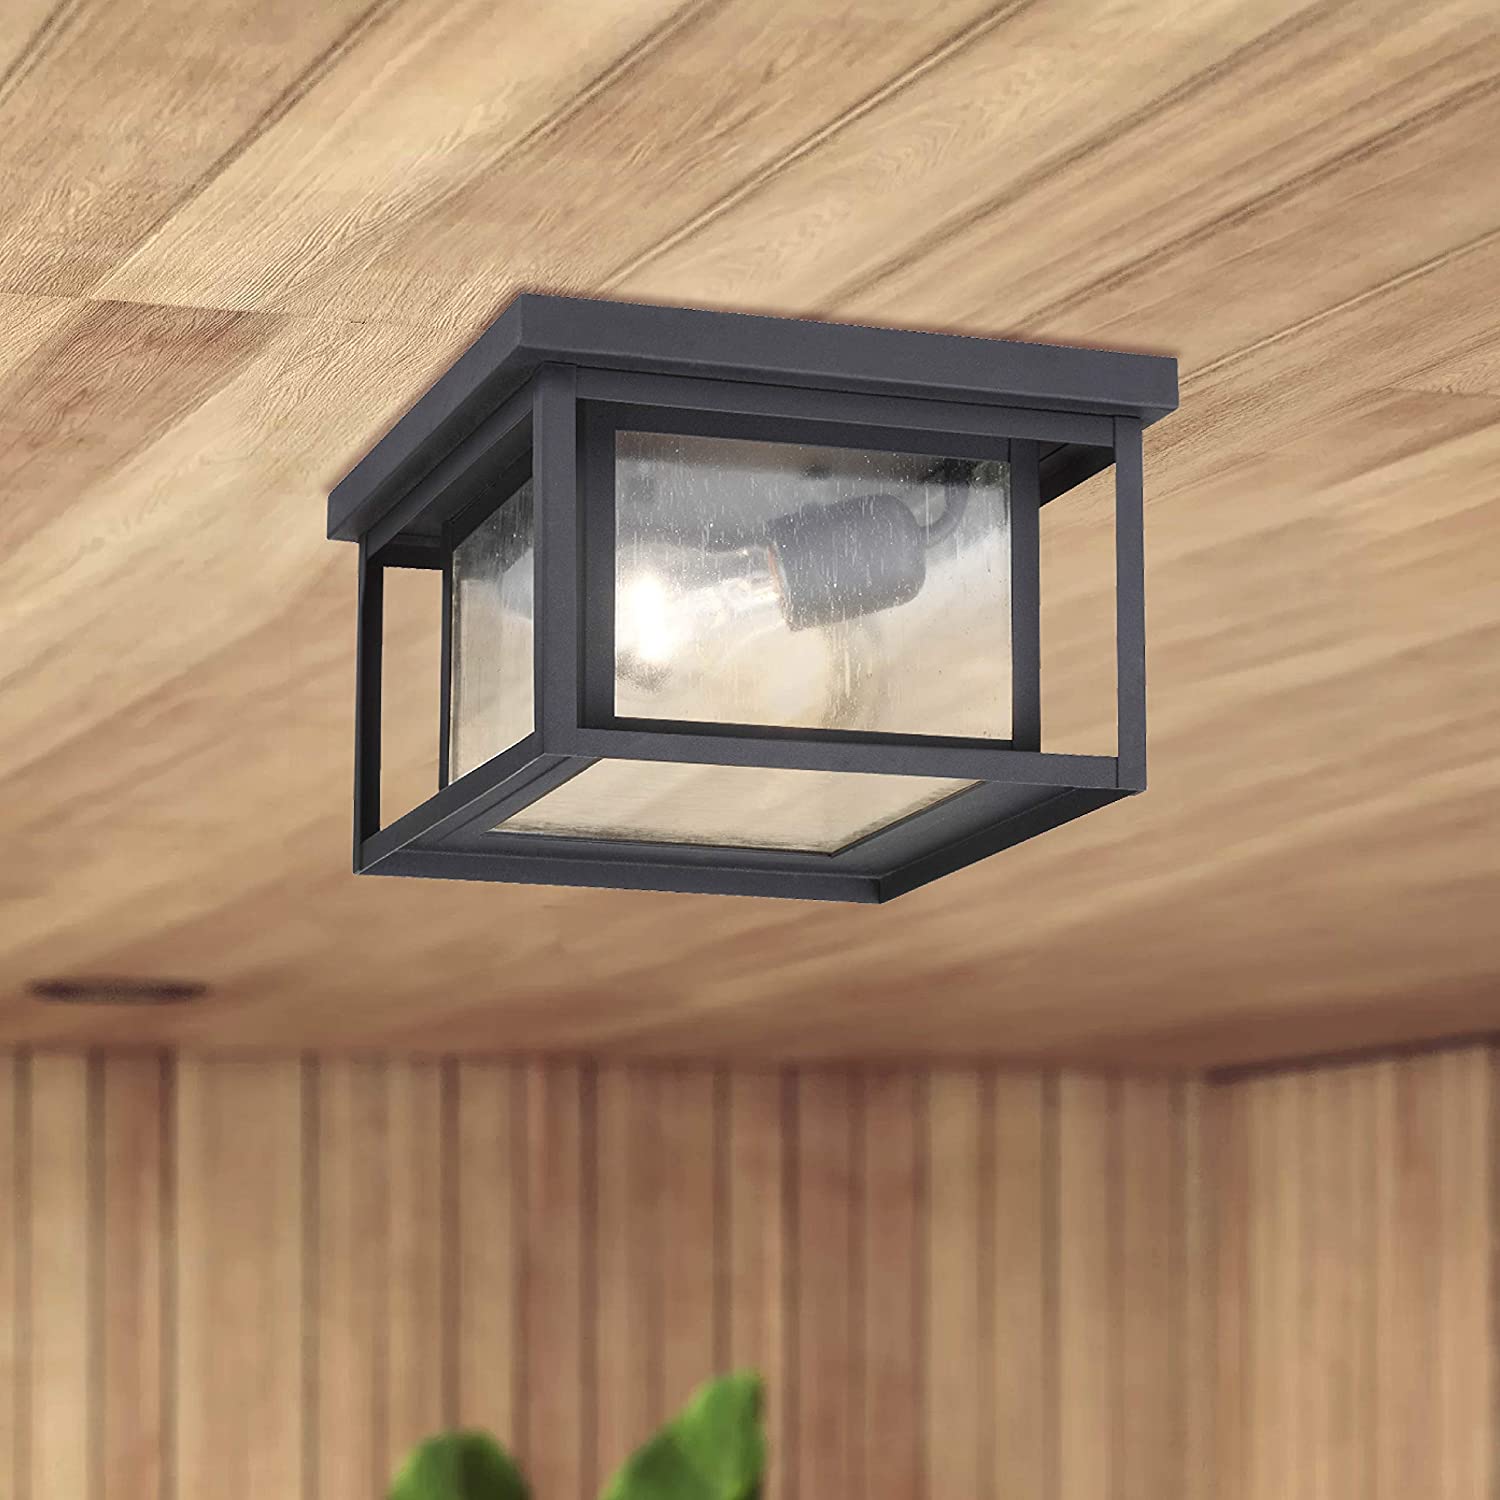 2 light ceiling flush mount industrual black ceiling light fixture